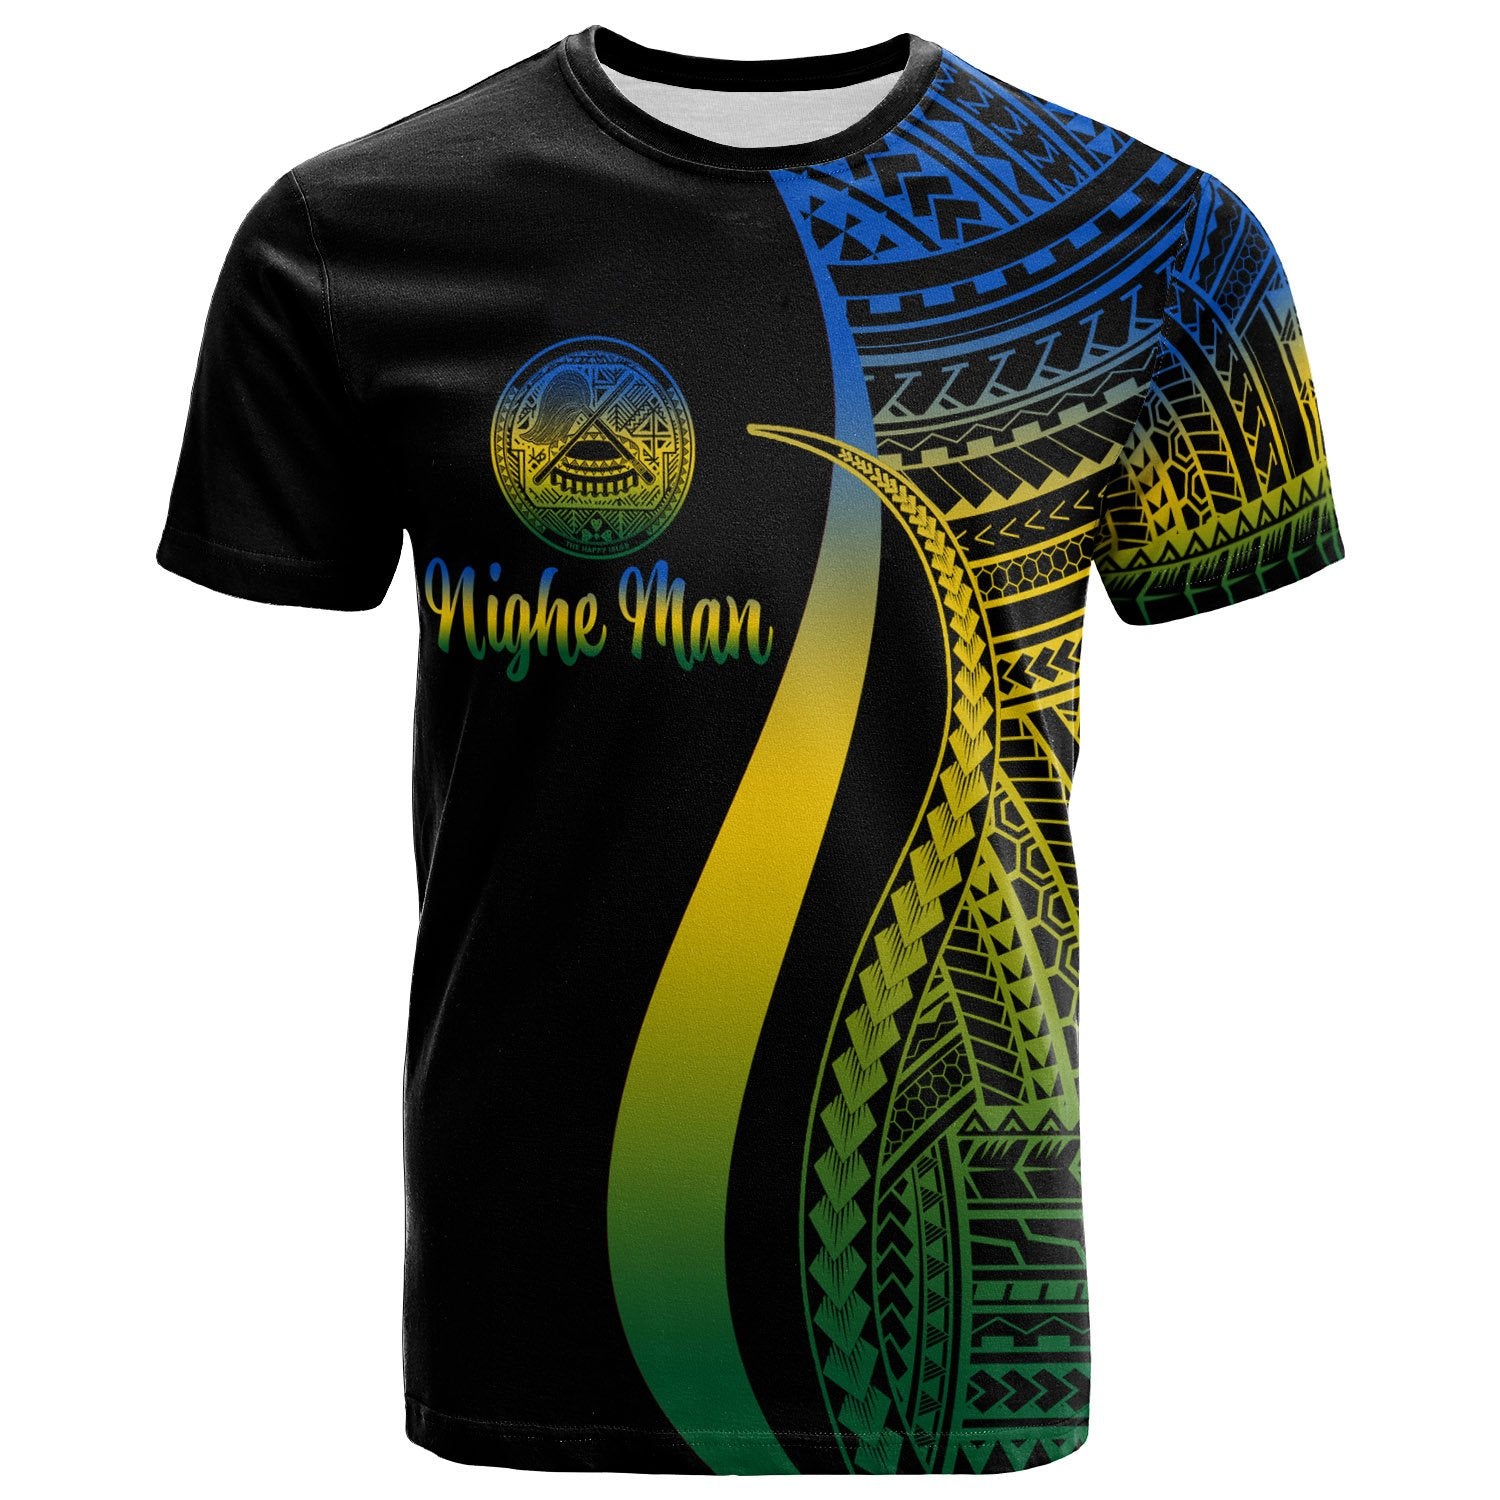 AS Solomon T Shirt Nighe Man ver2 Polynesian Tentacle Tribal Pattern Unisex Art - Polynesian Pride